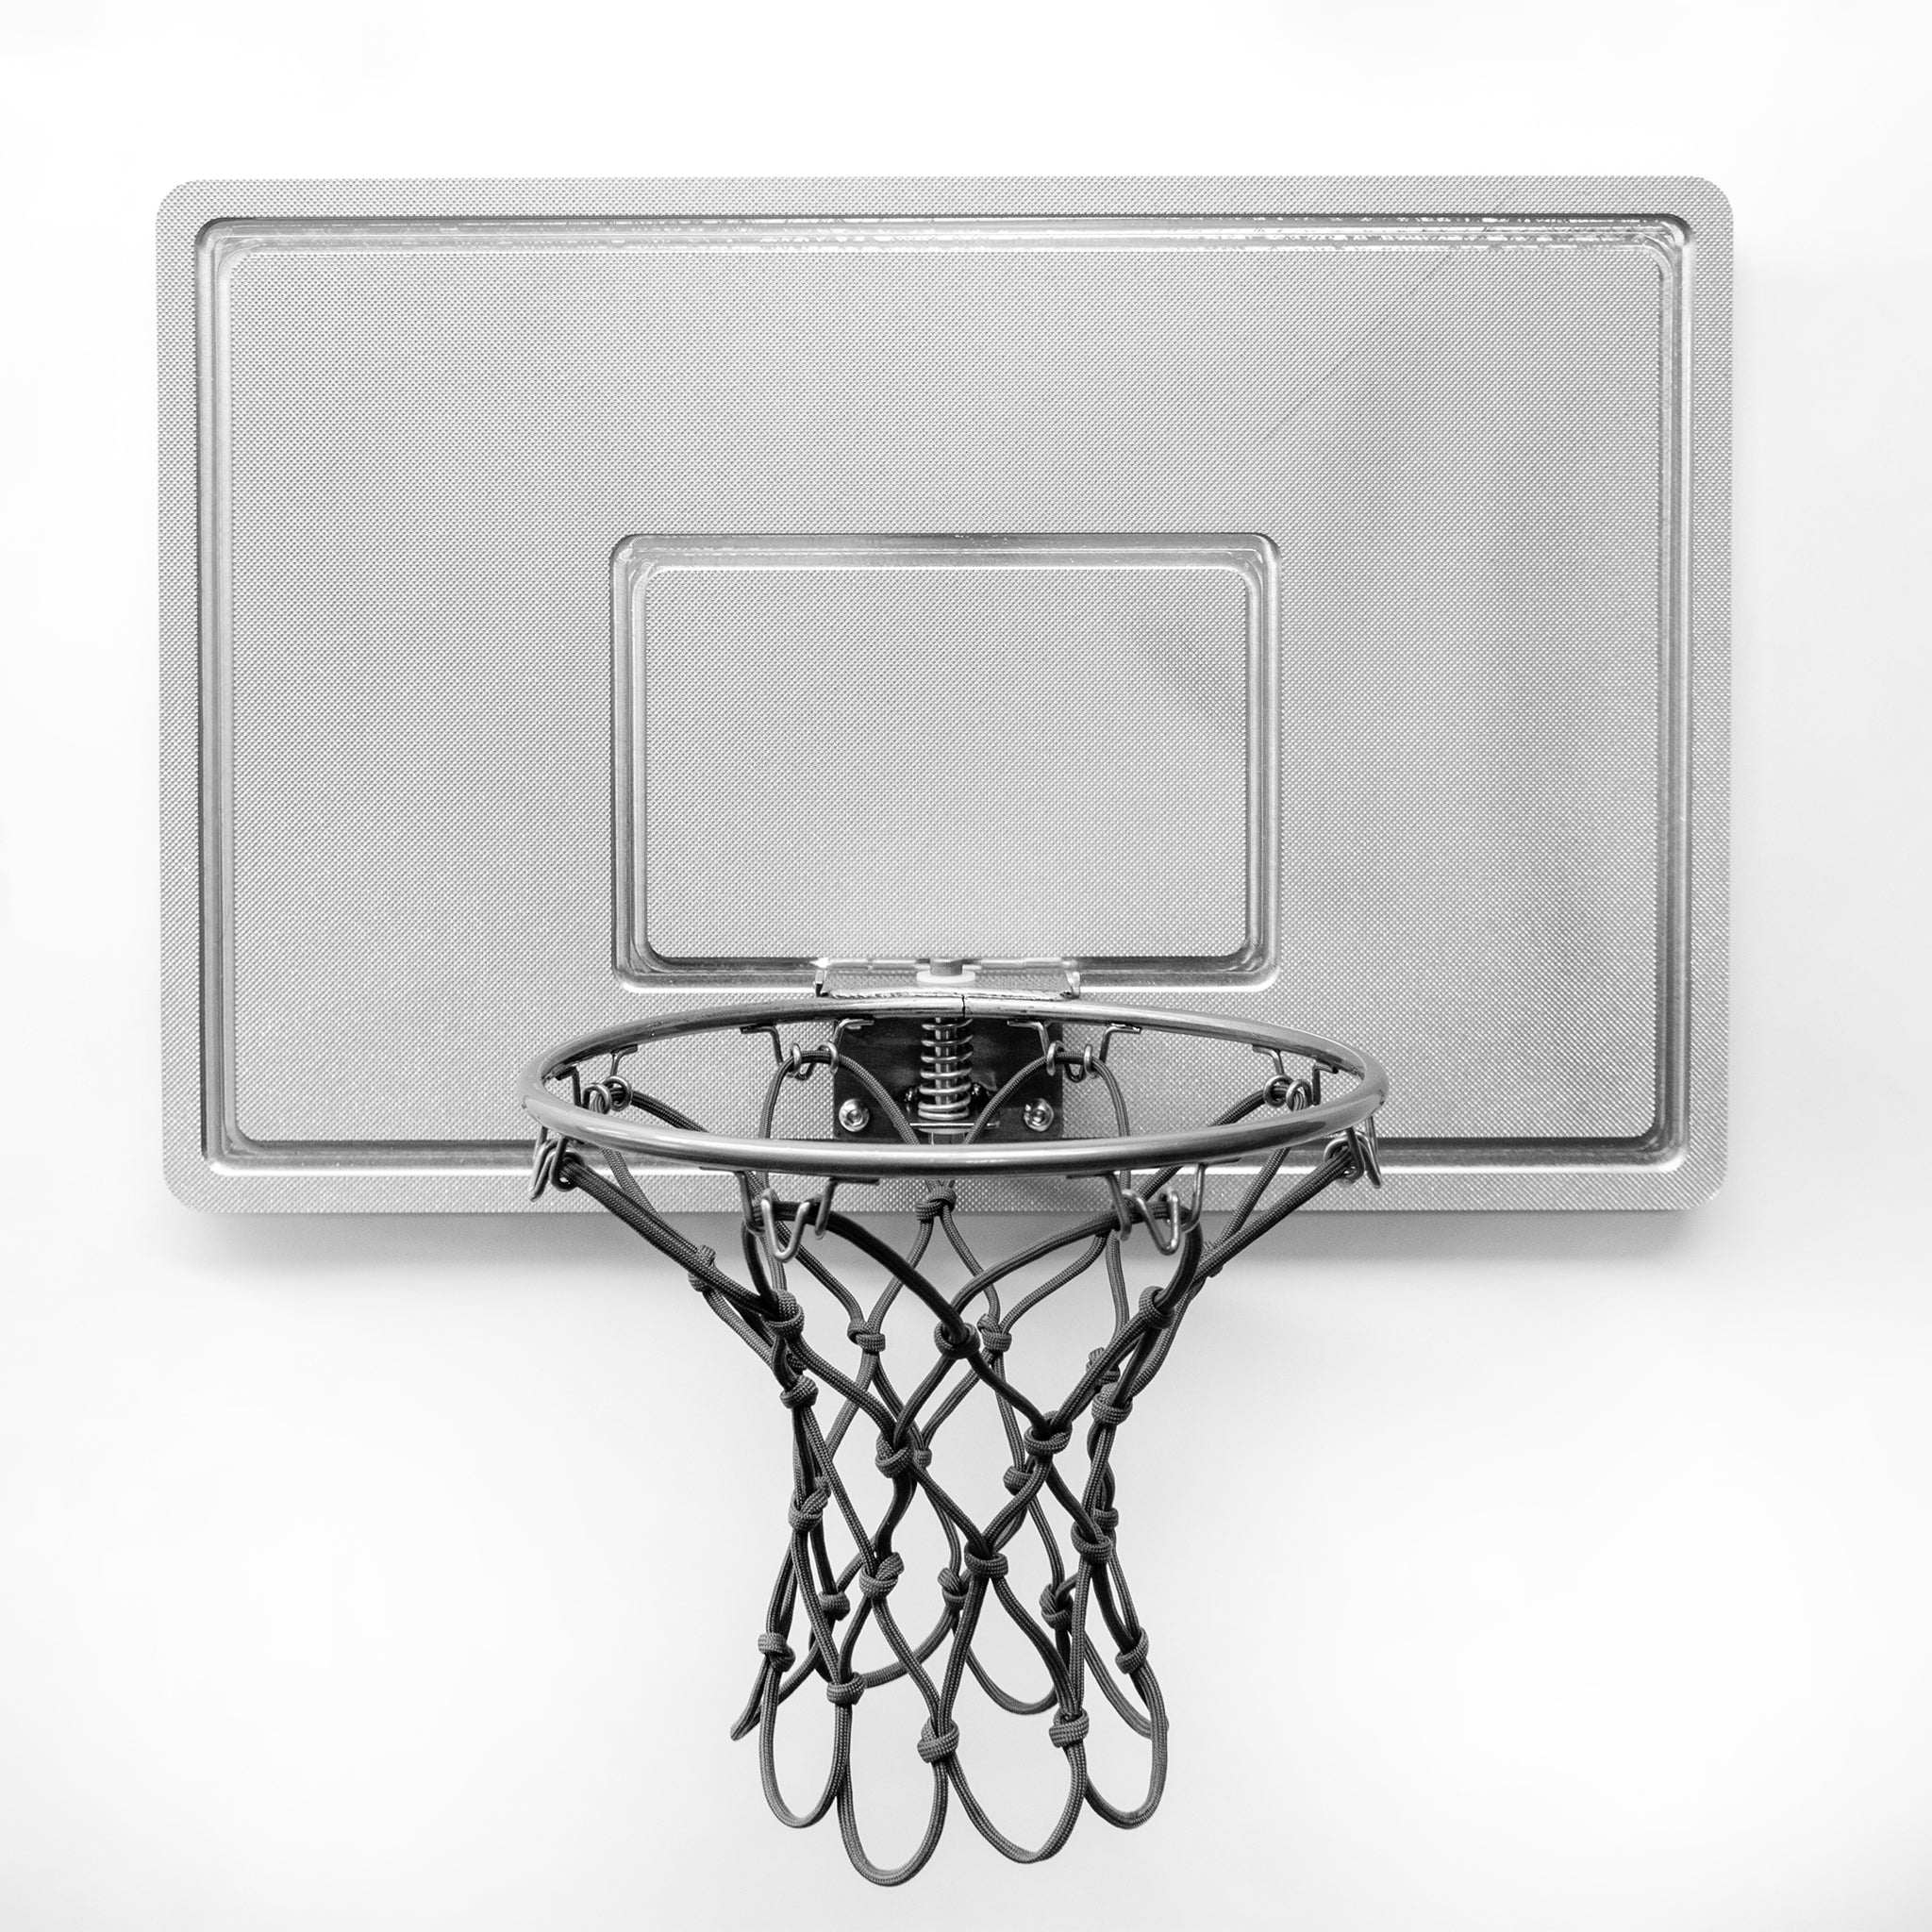 Fullmetal Mini Basketball Hoop